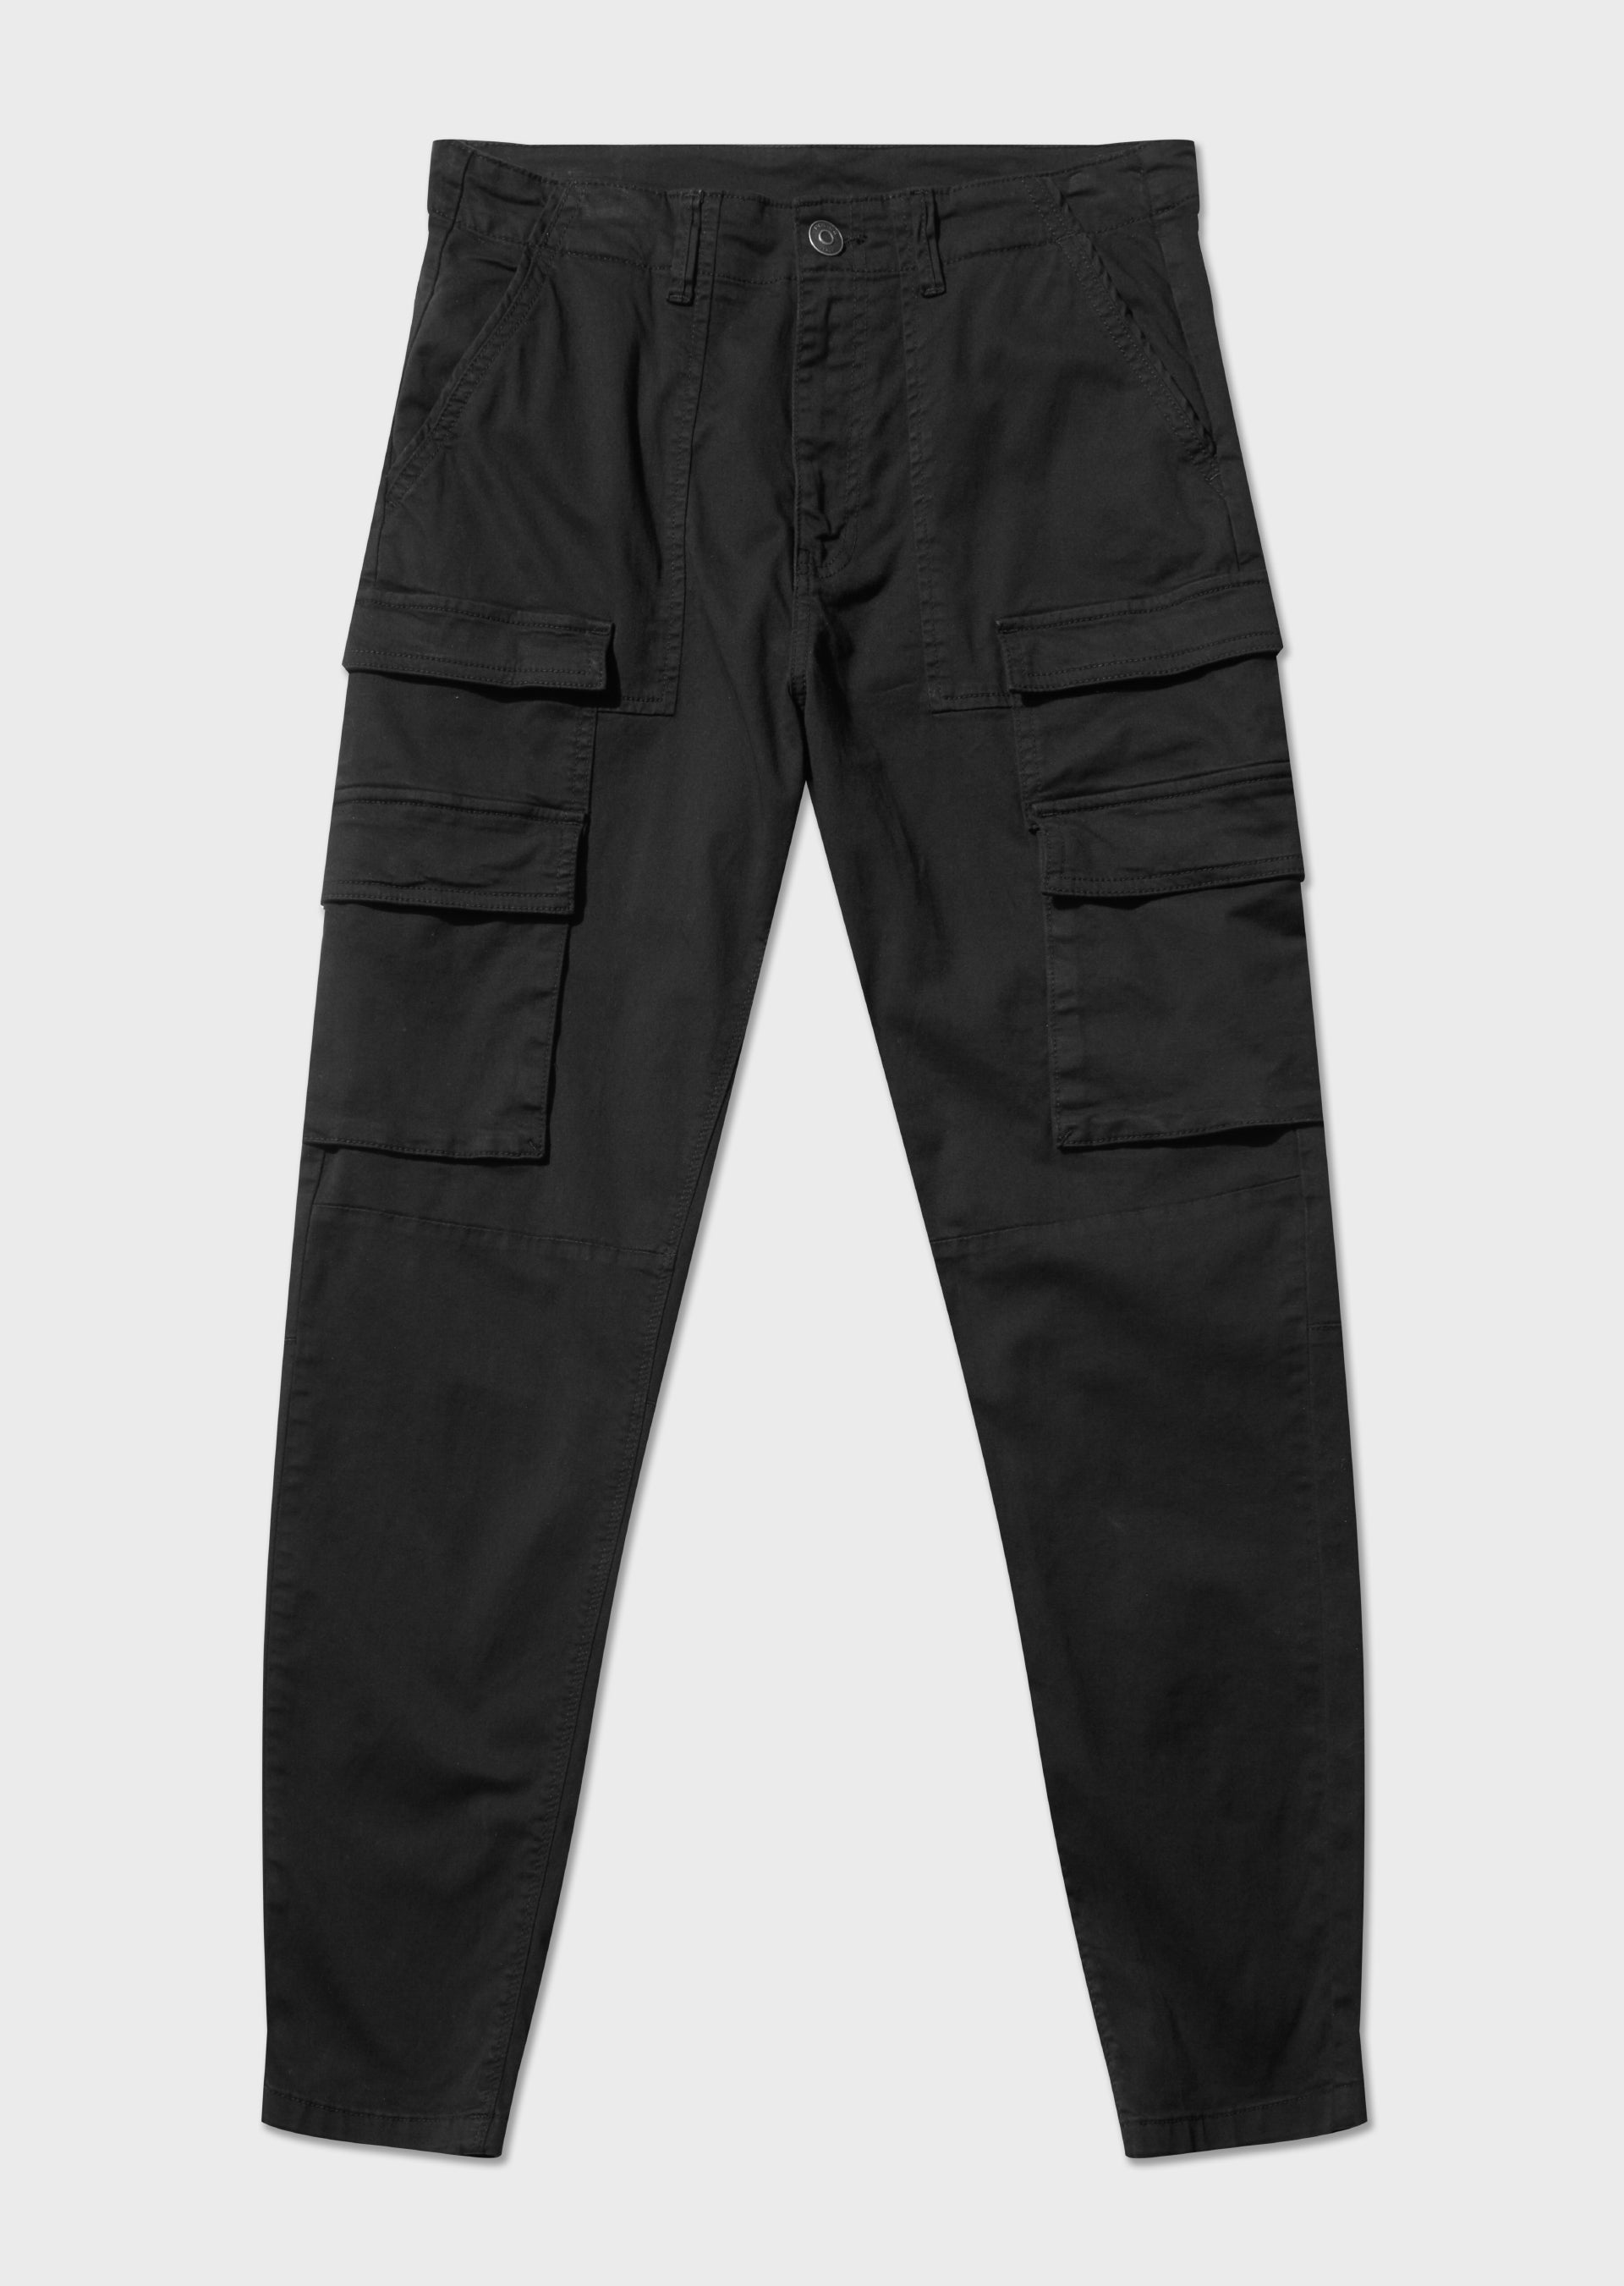 Concor Black Cargo Pants – 883 Police